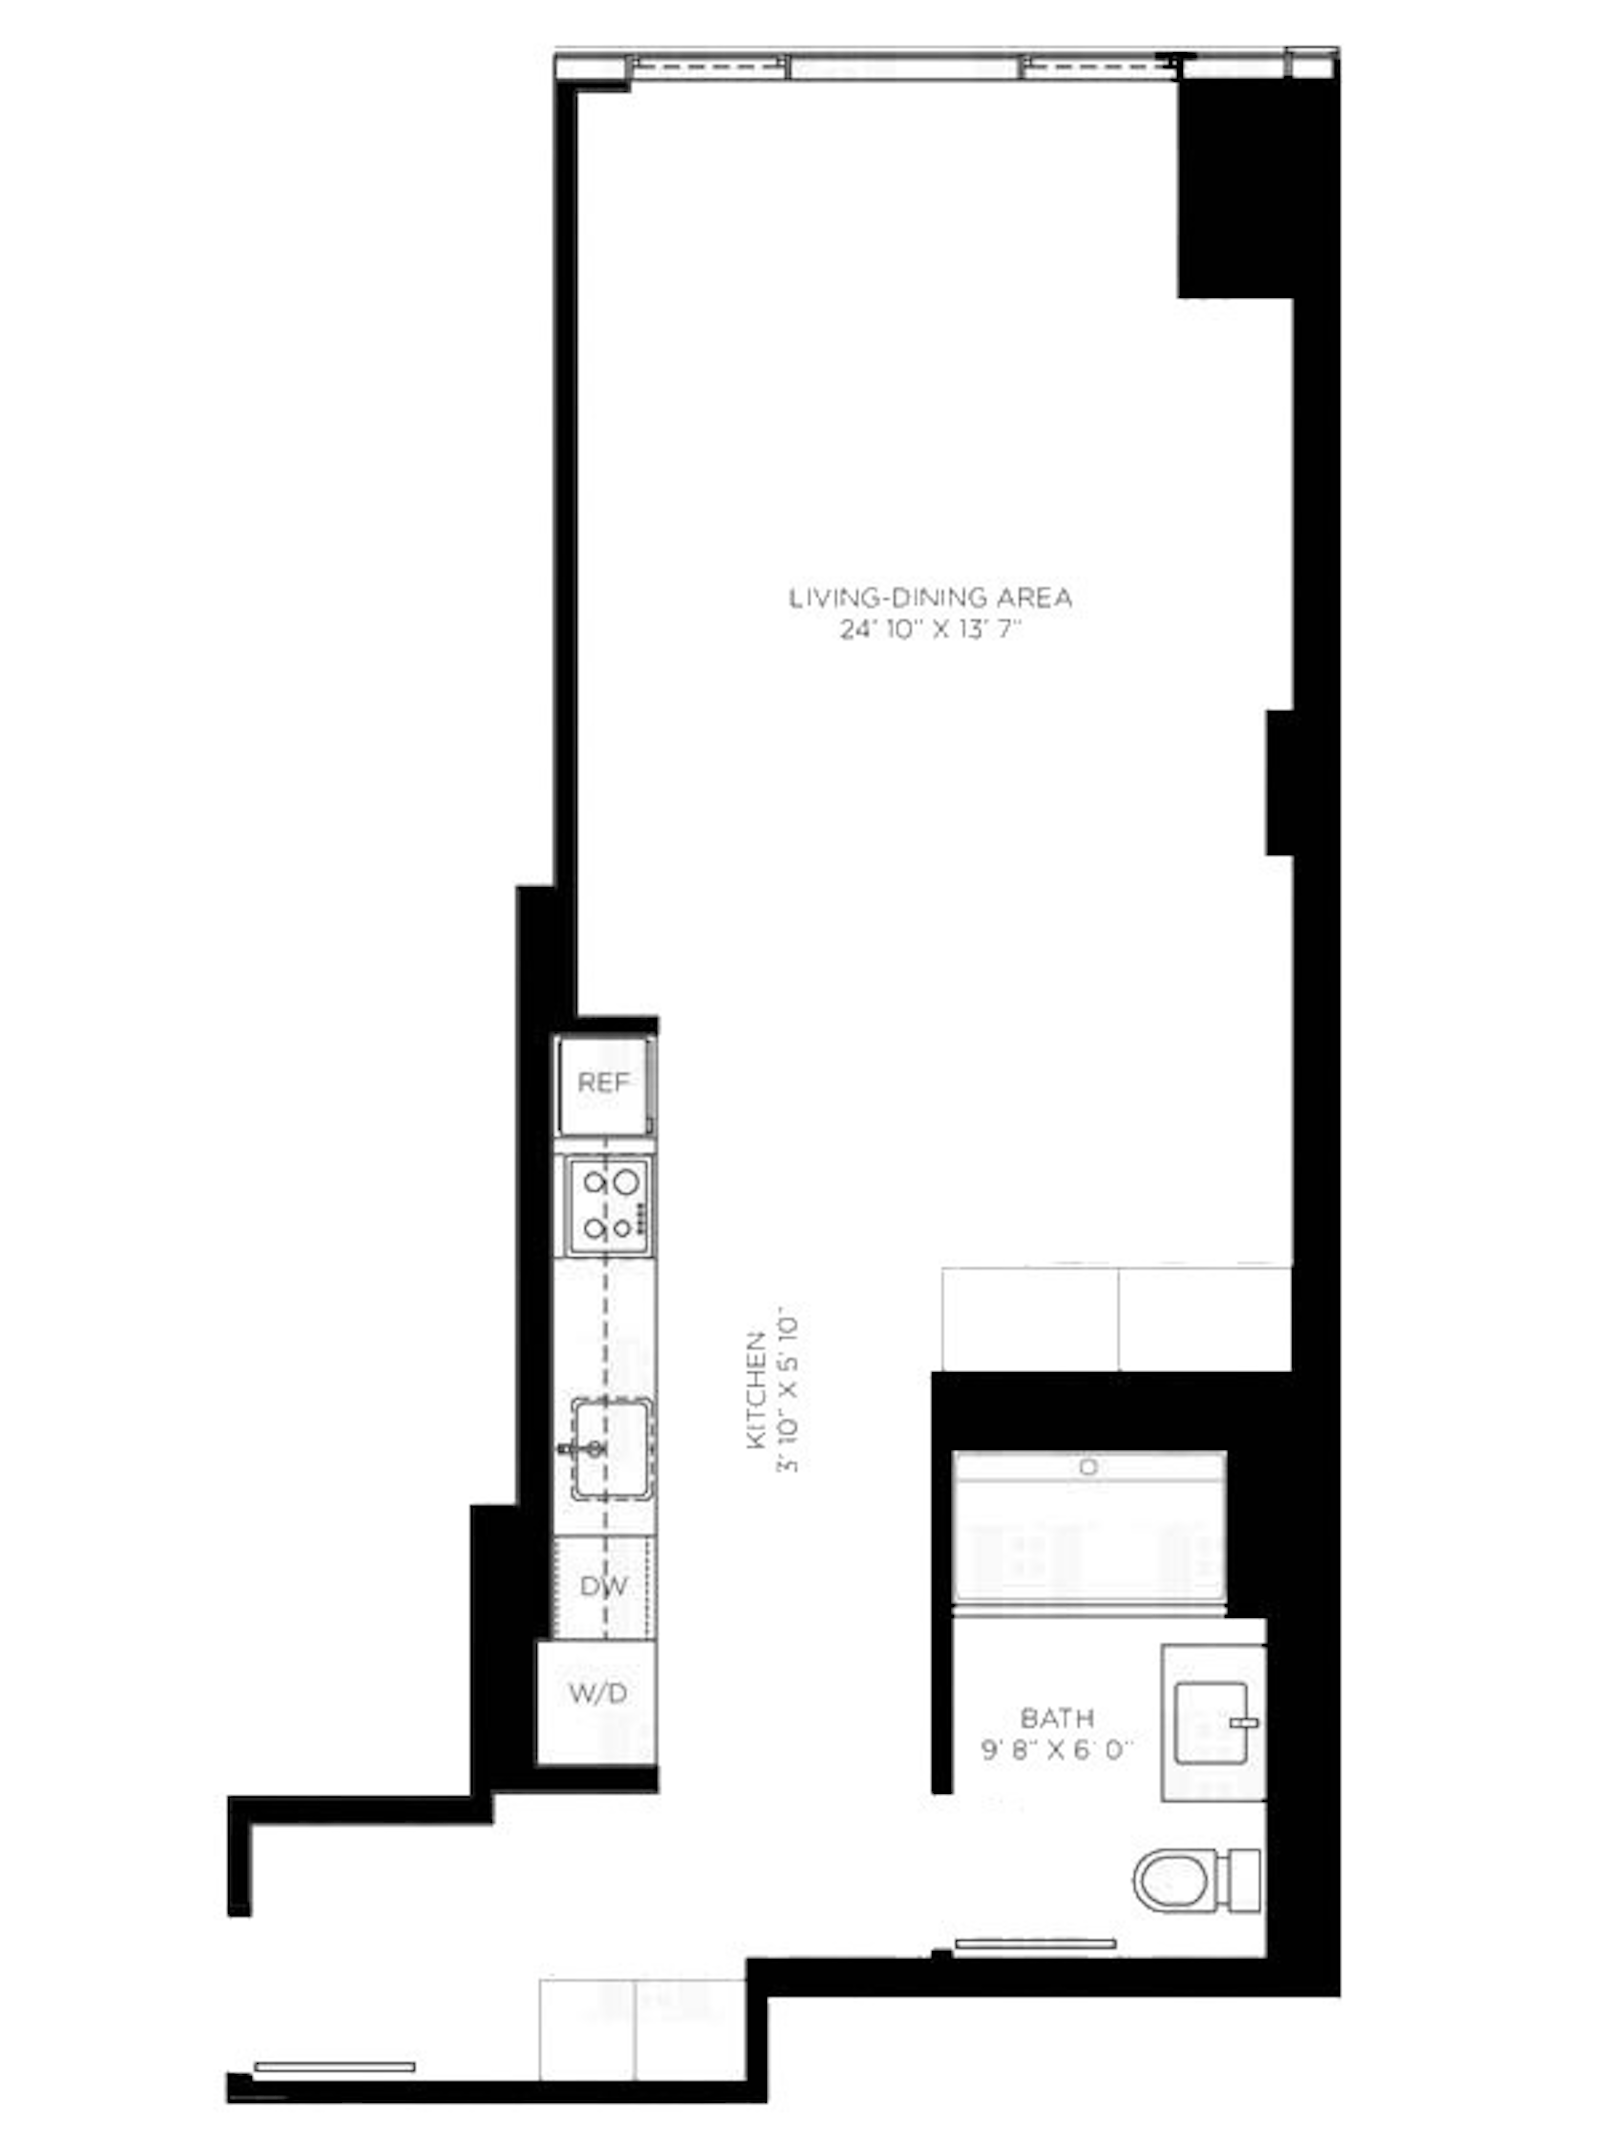 Floorplan for 540 West 49th Street, 505N